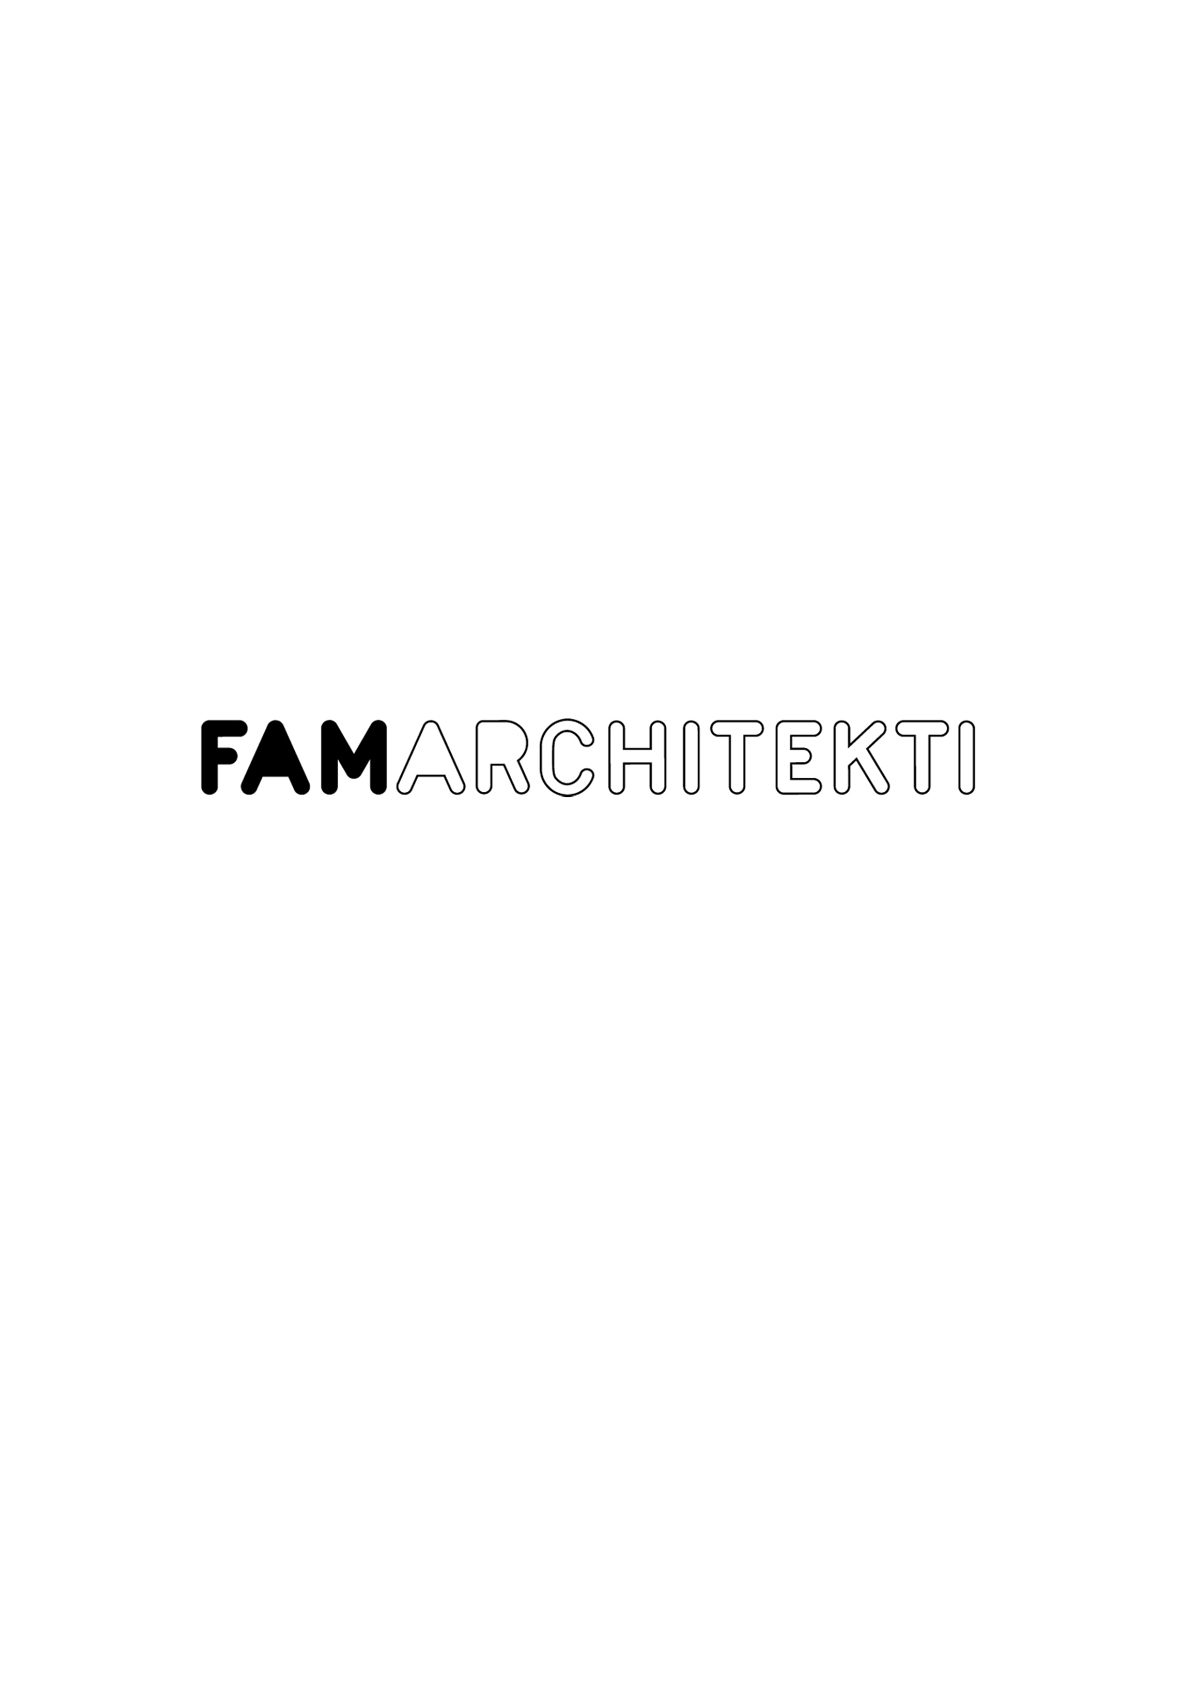 FAM Architekti